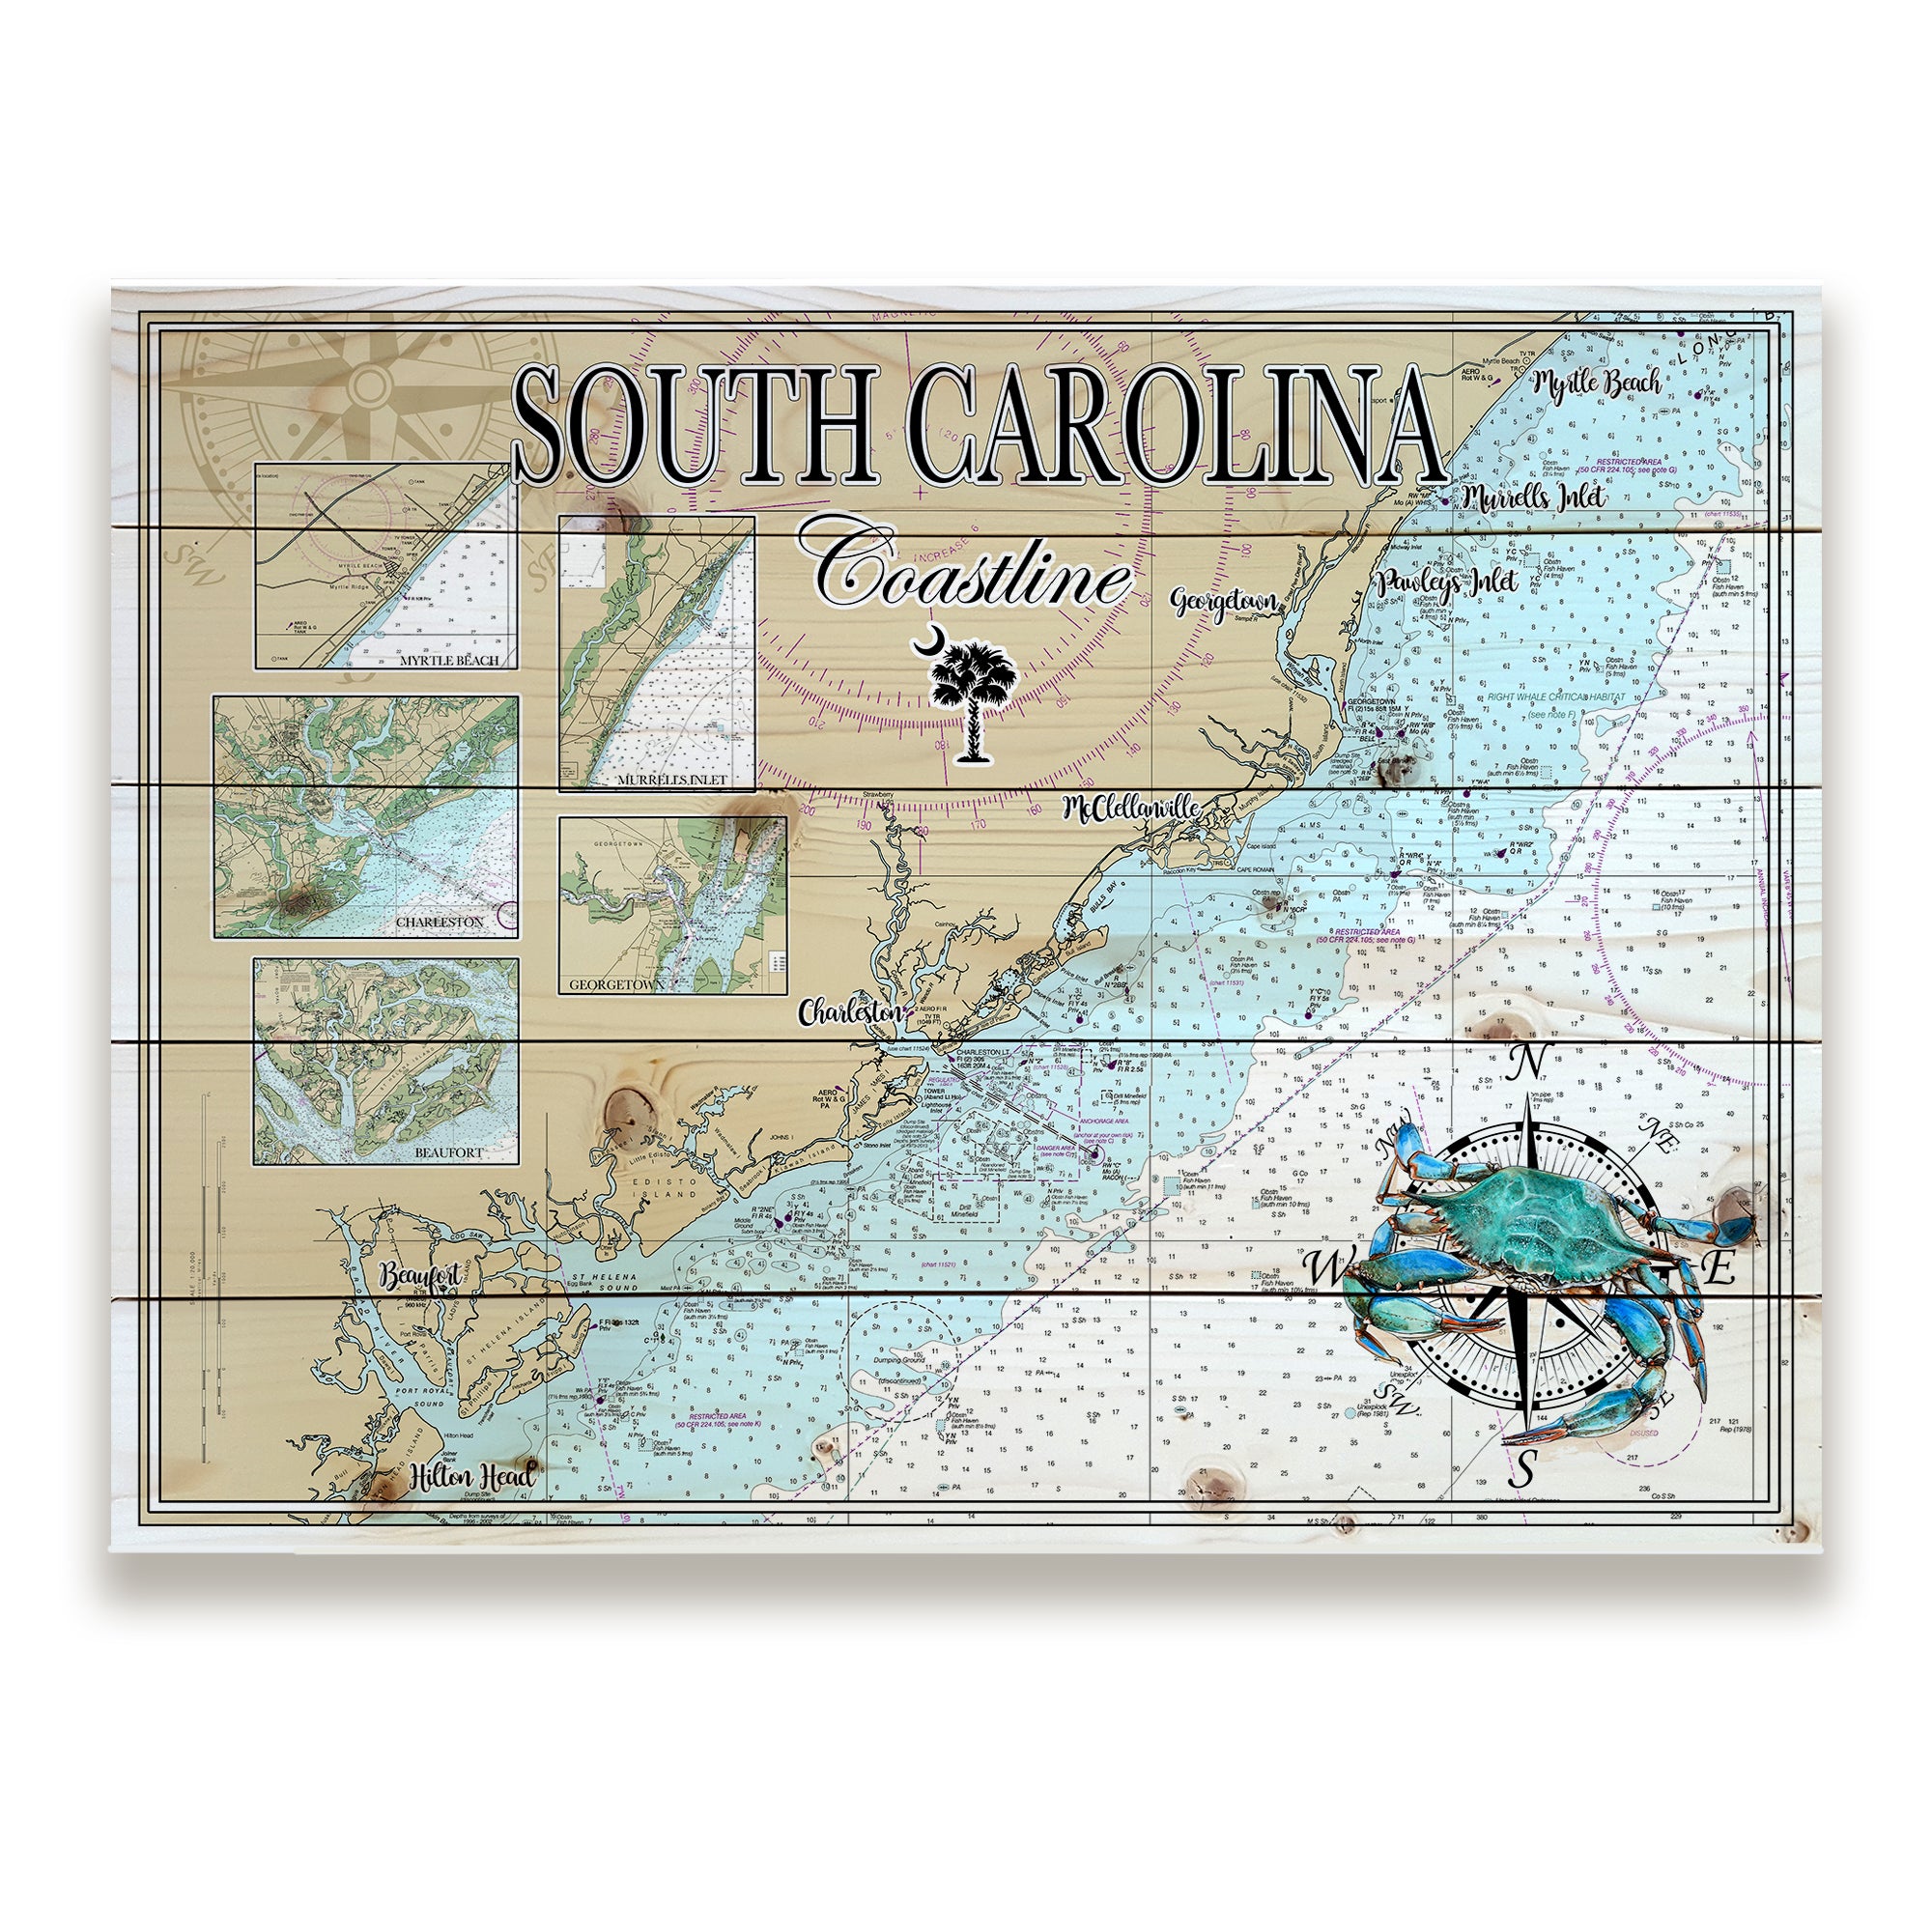 South Carolina Coastline - Blue Crab Pallet Map